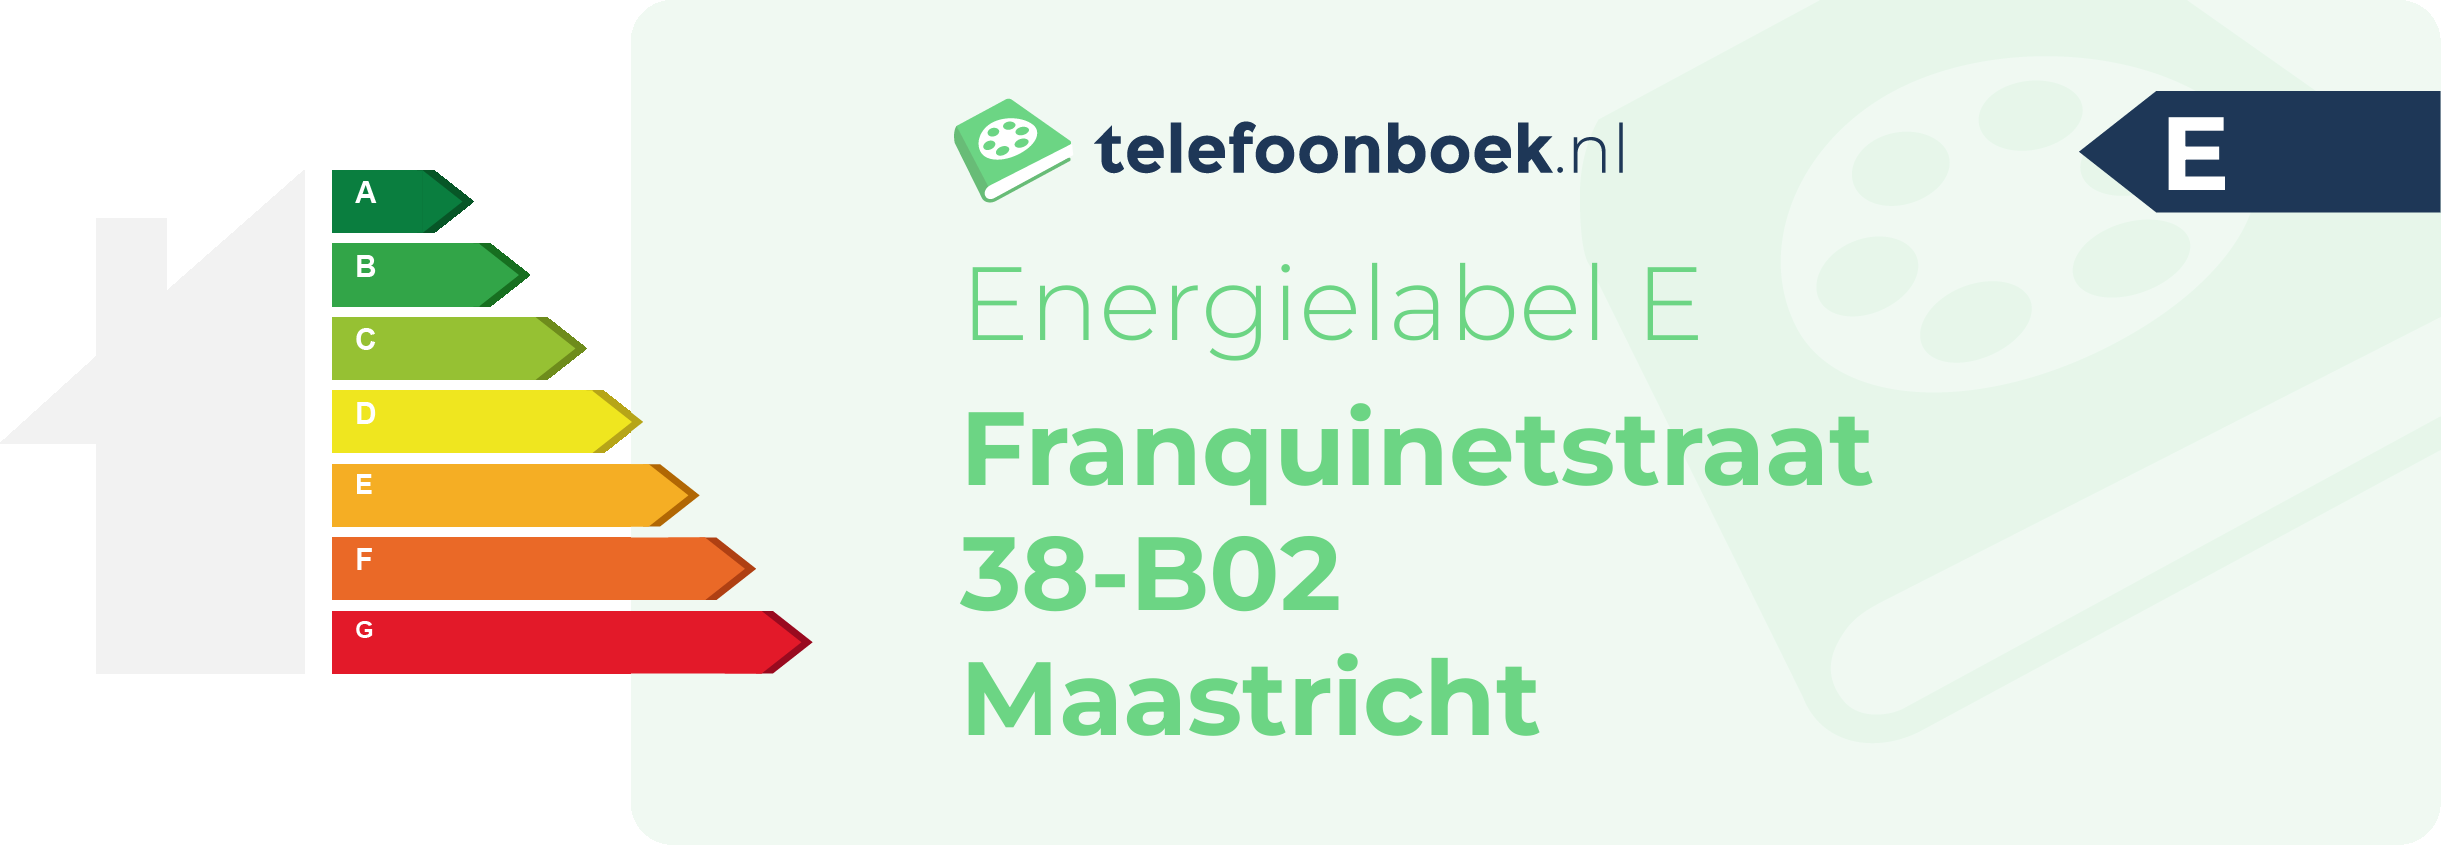 Energielabel Franquinetstraat 38-B02 Maastricht